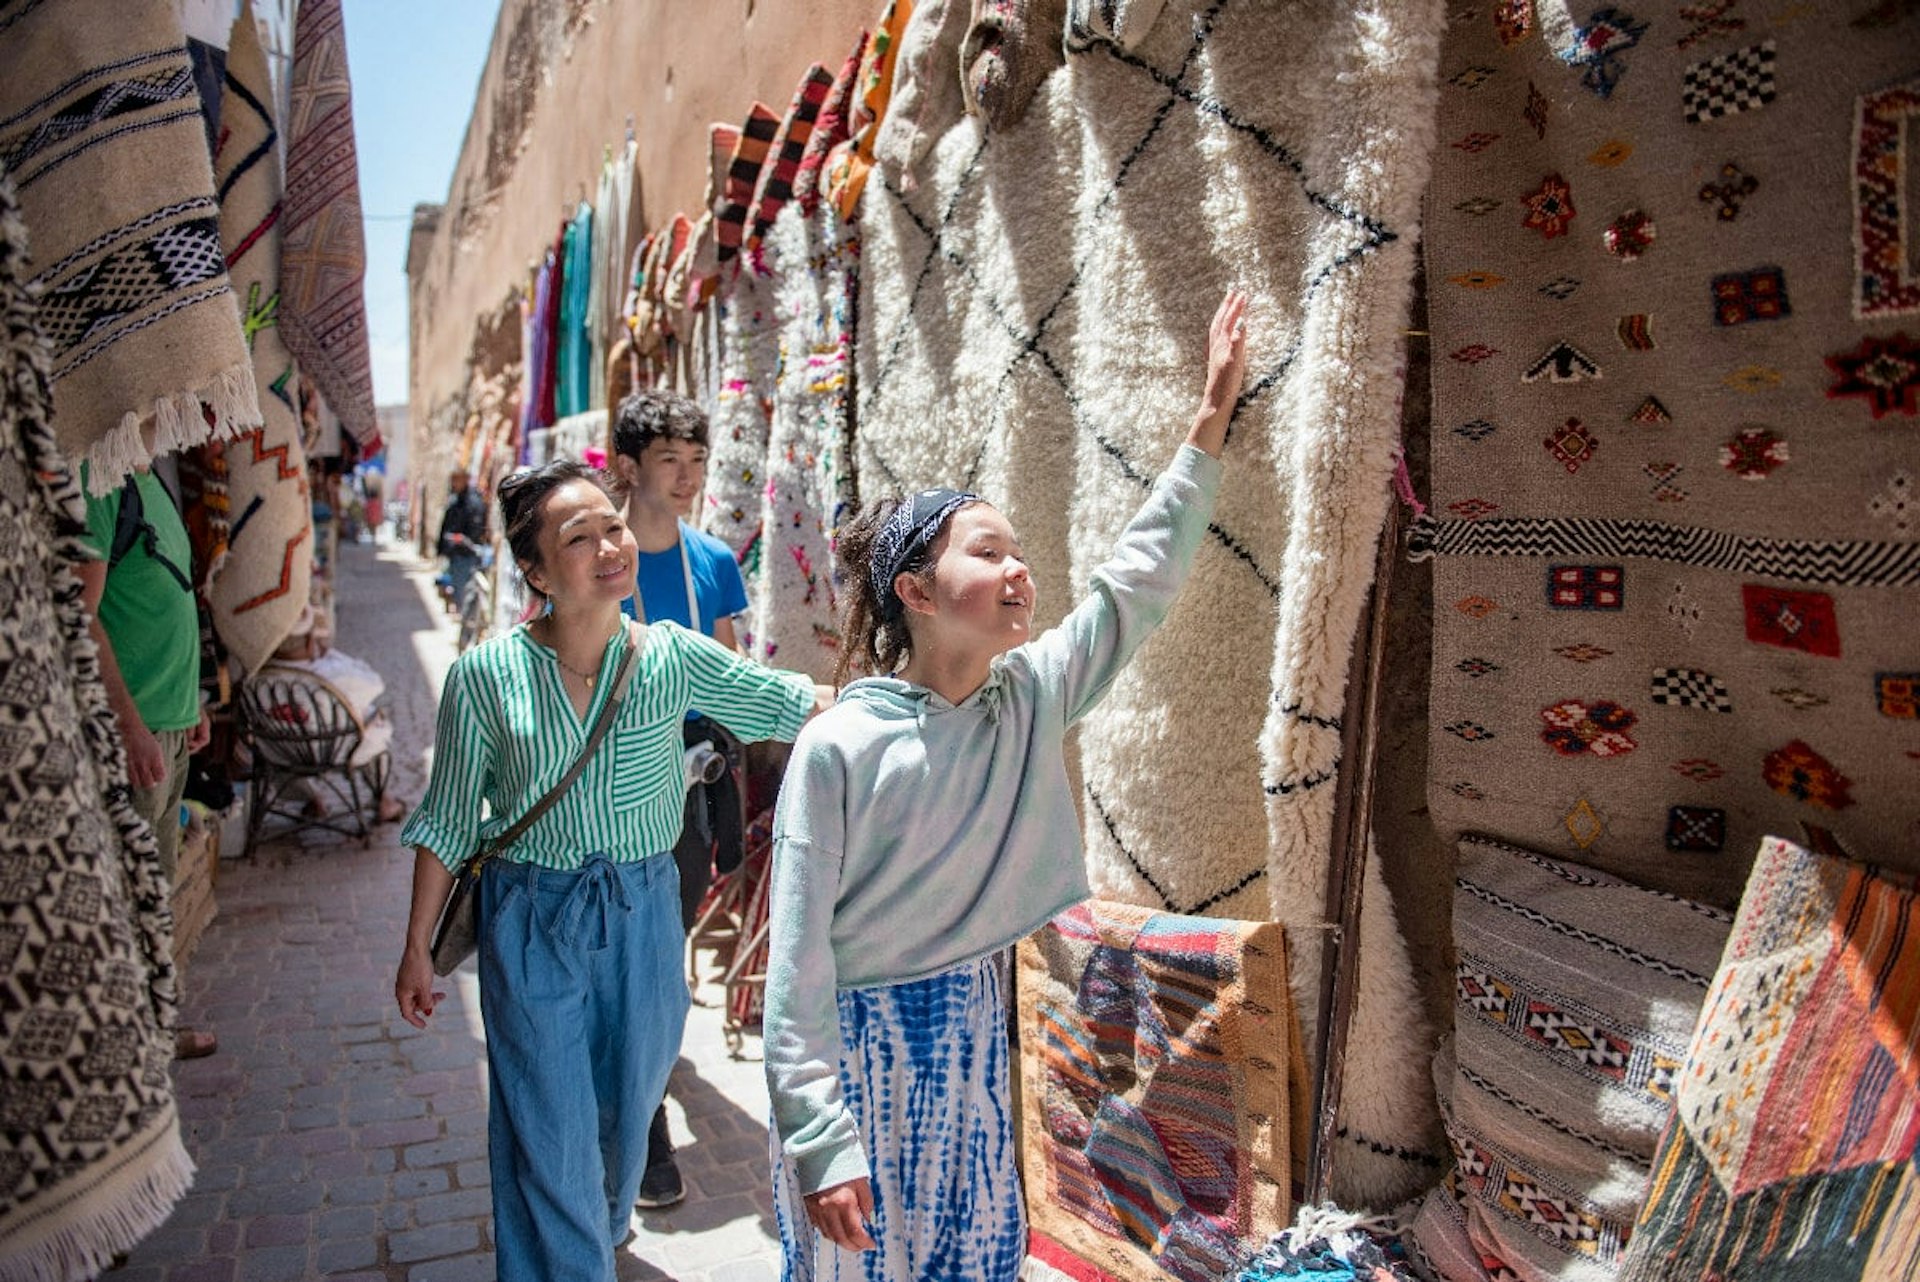 Women looking at Berber rugs in Marrakech